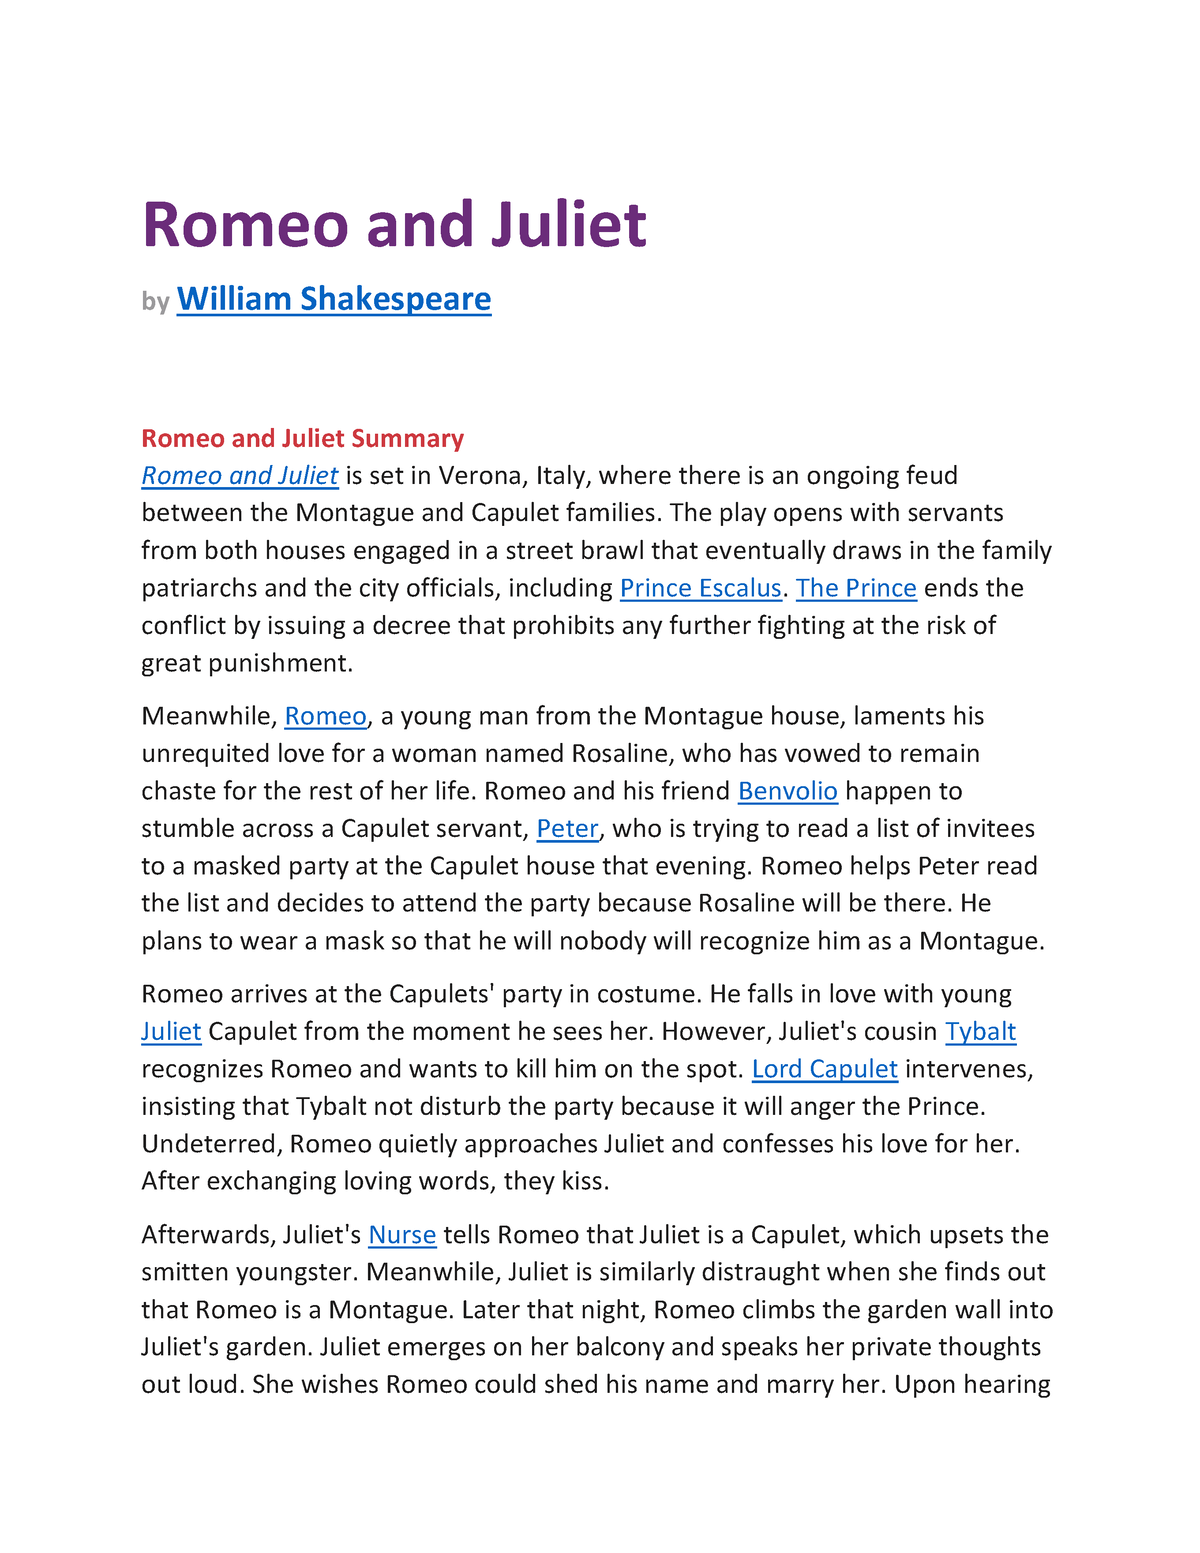 romeo and juliet essay summary 200 words